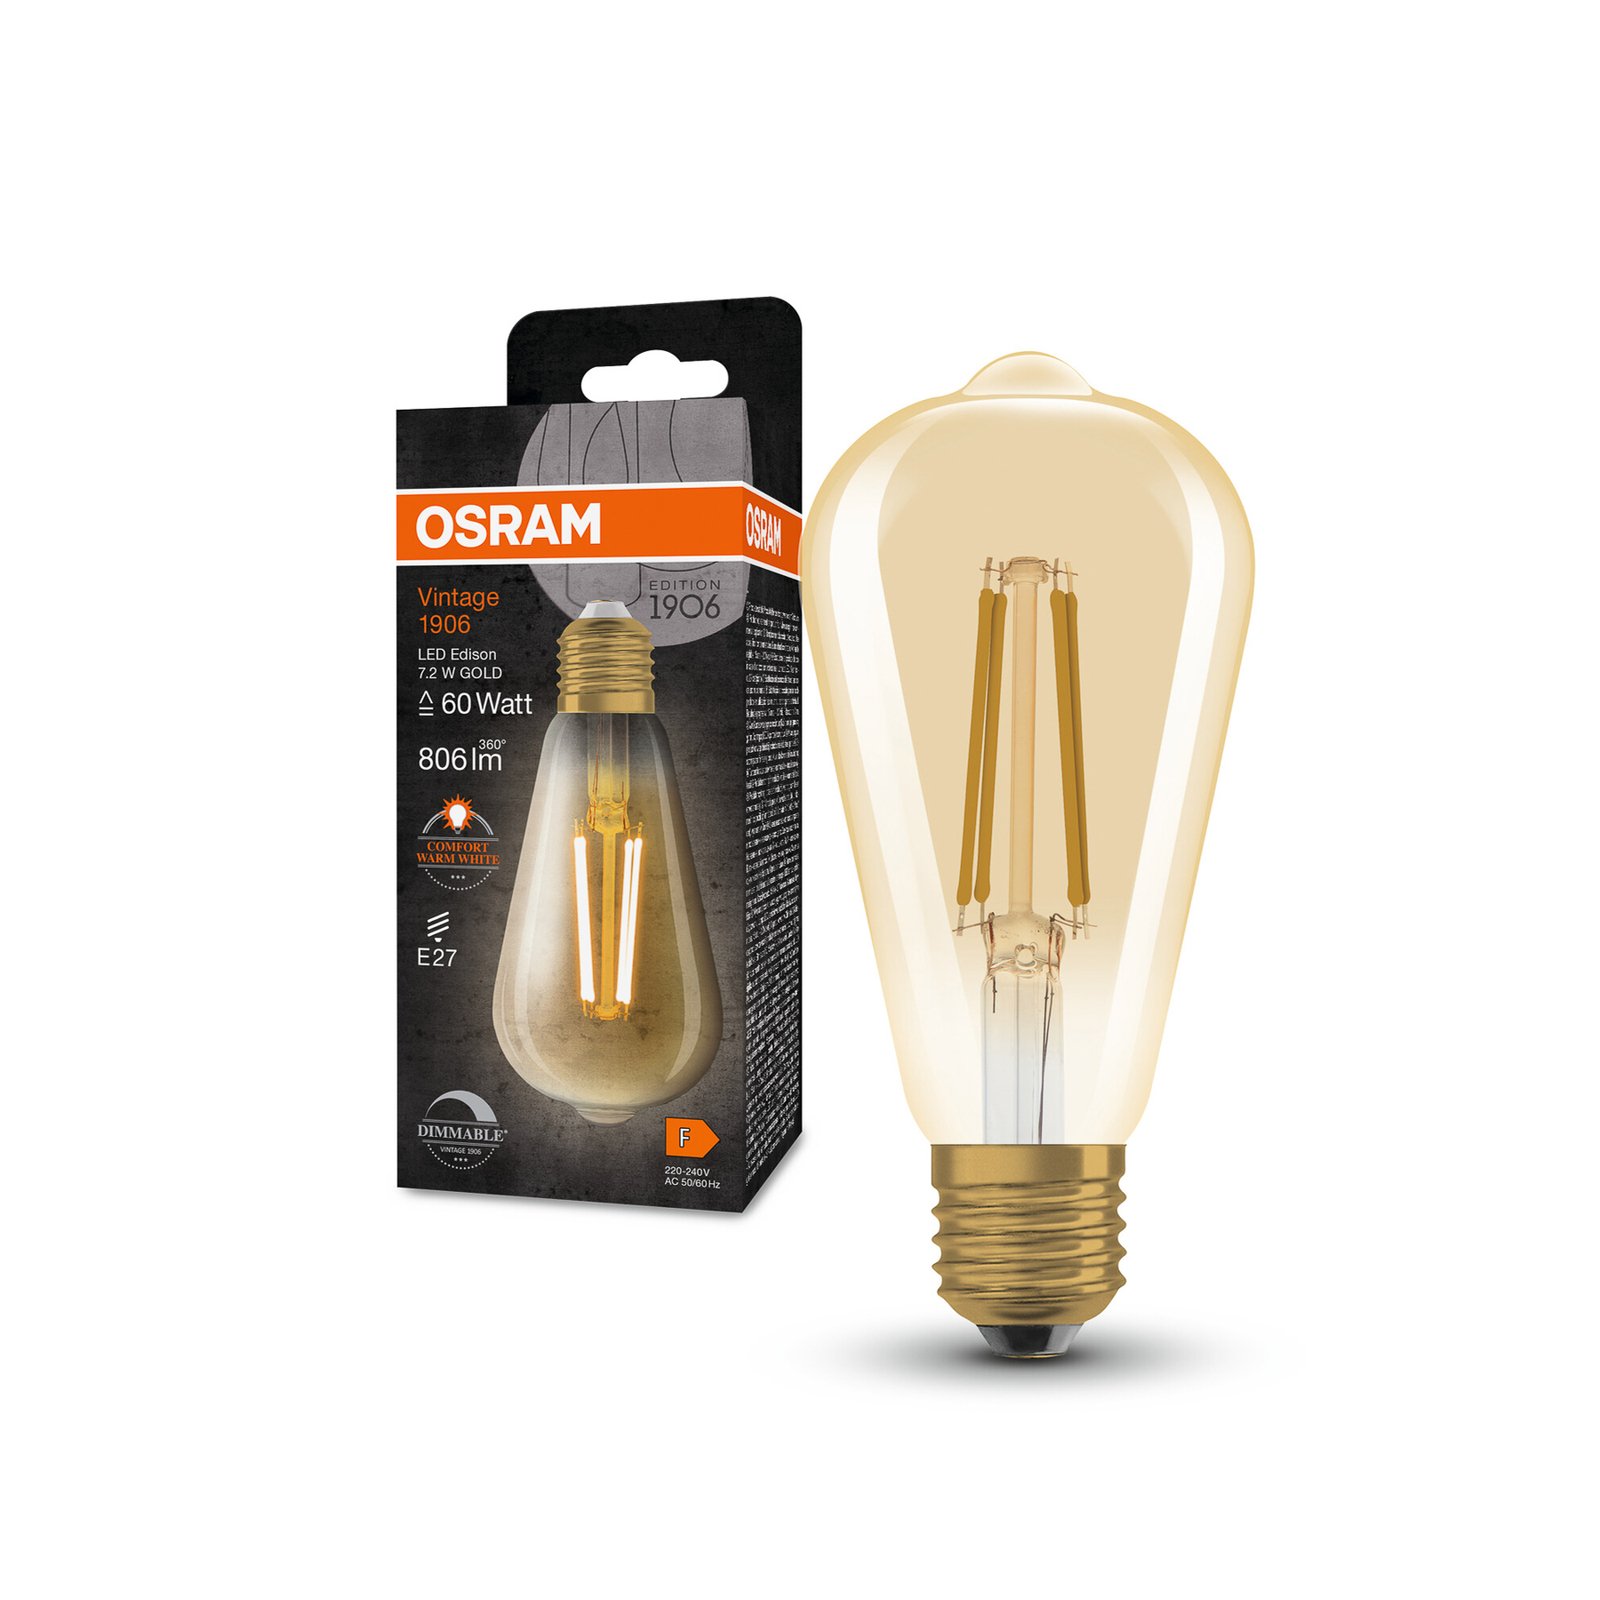 OSRAM LED Vintage 1906 Edison, dourado, E27, 7.2 W, 824, dim.